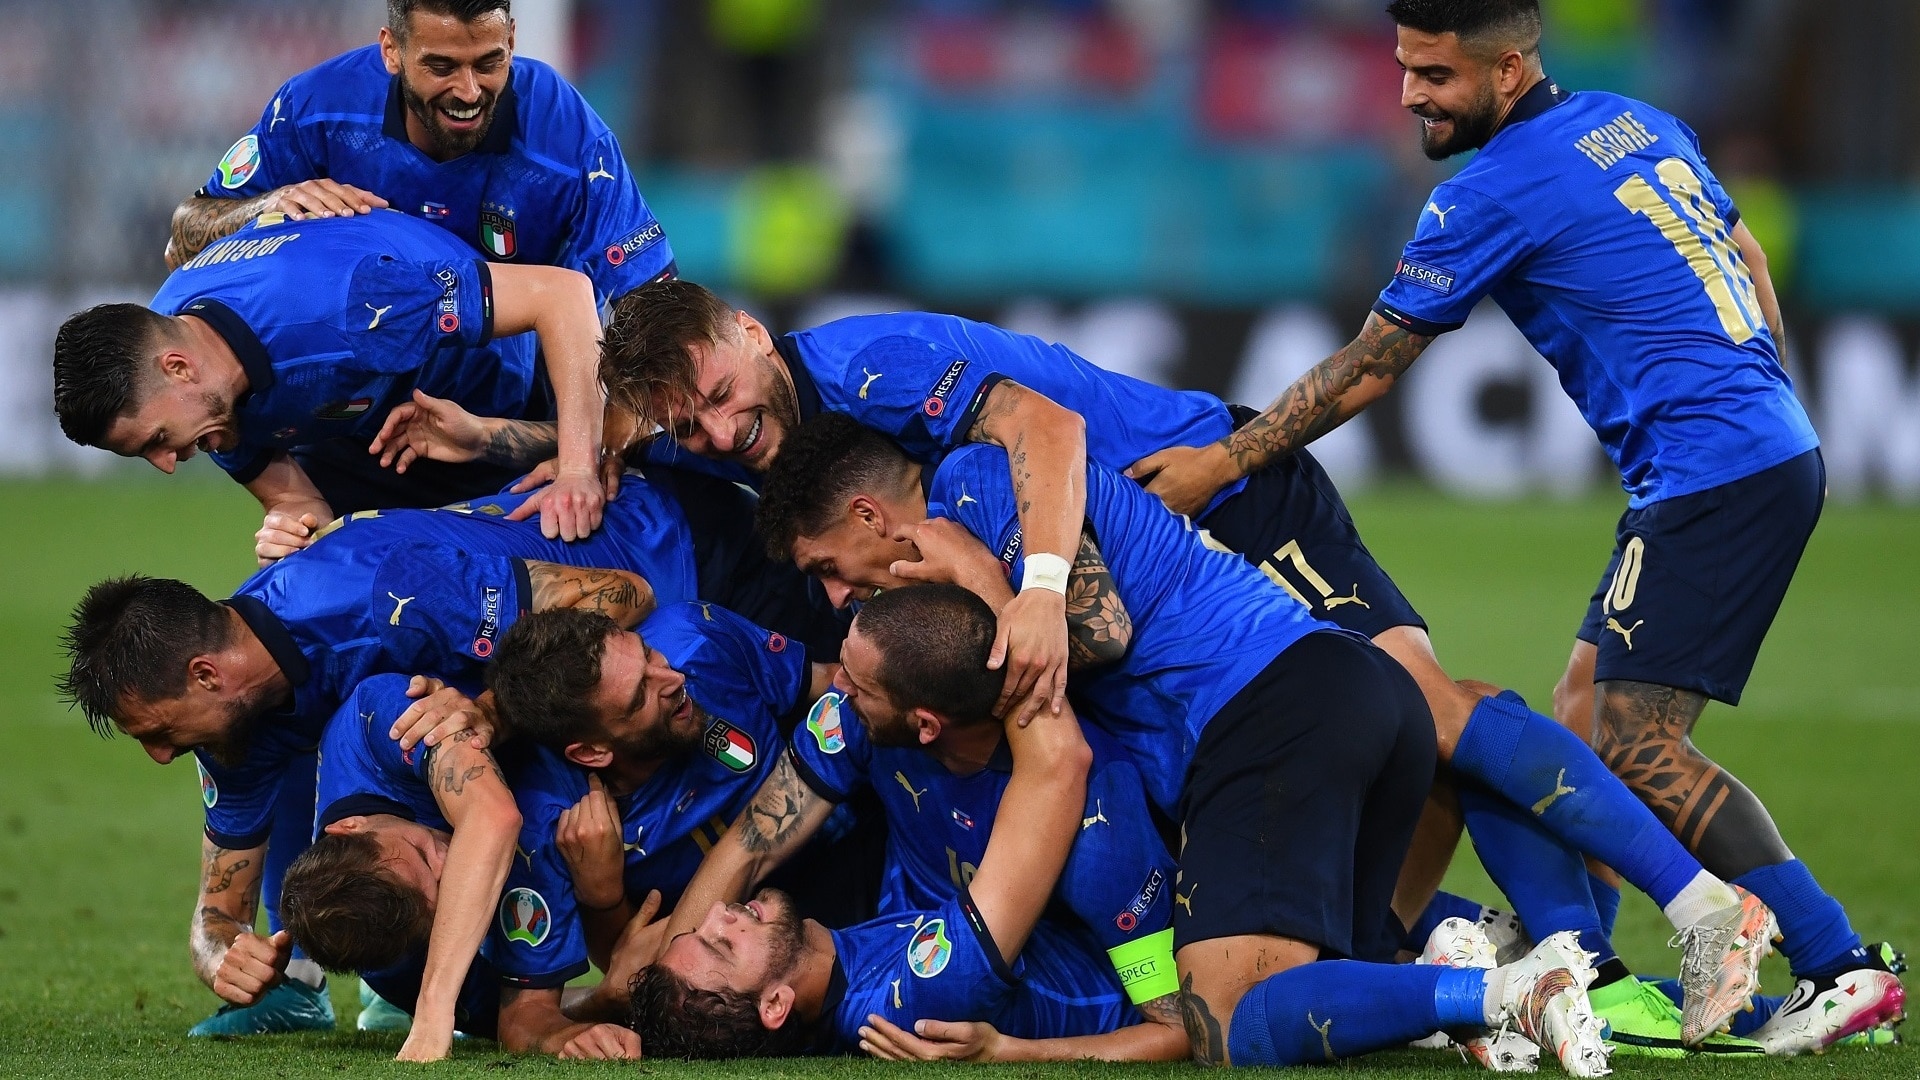 Euro 2020 Italia Inghilterra